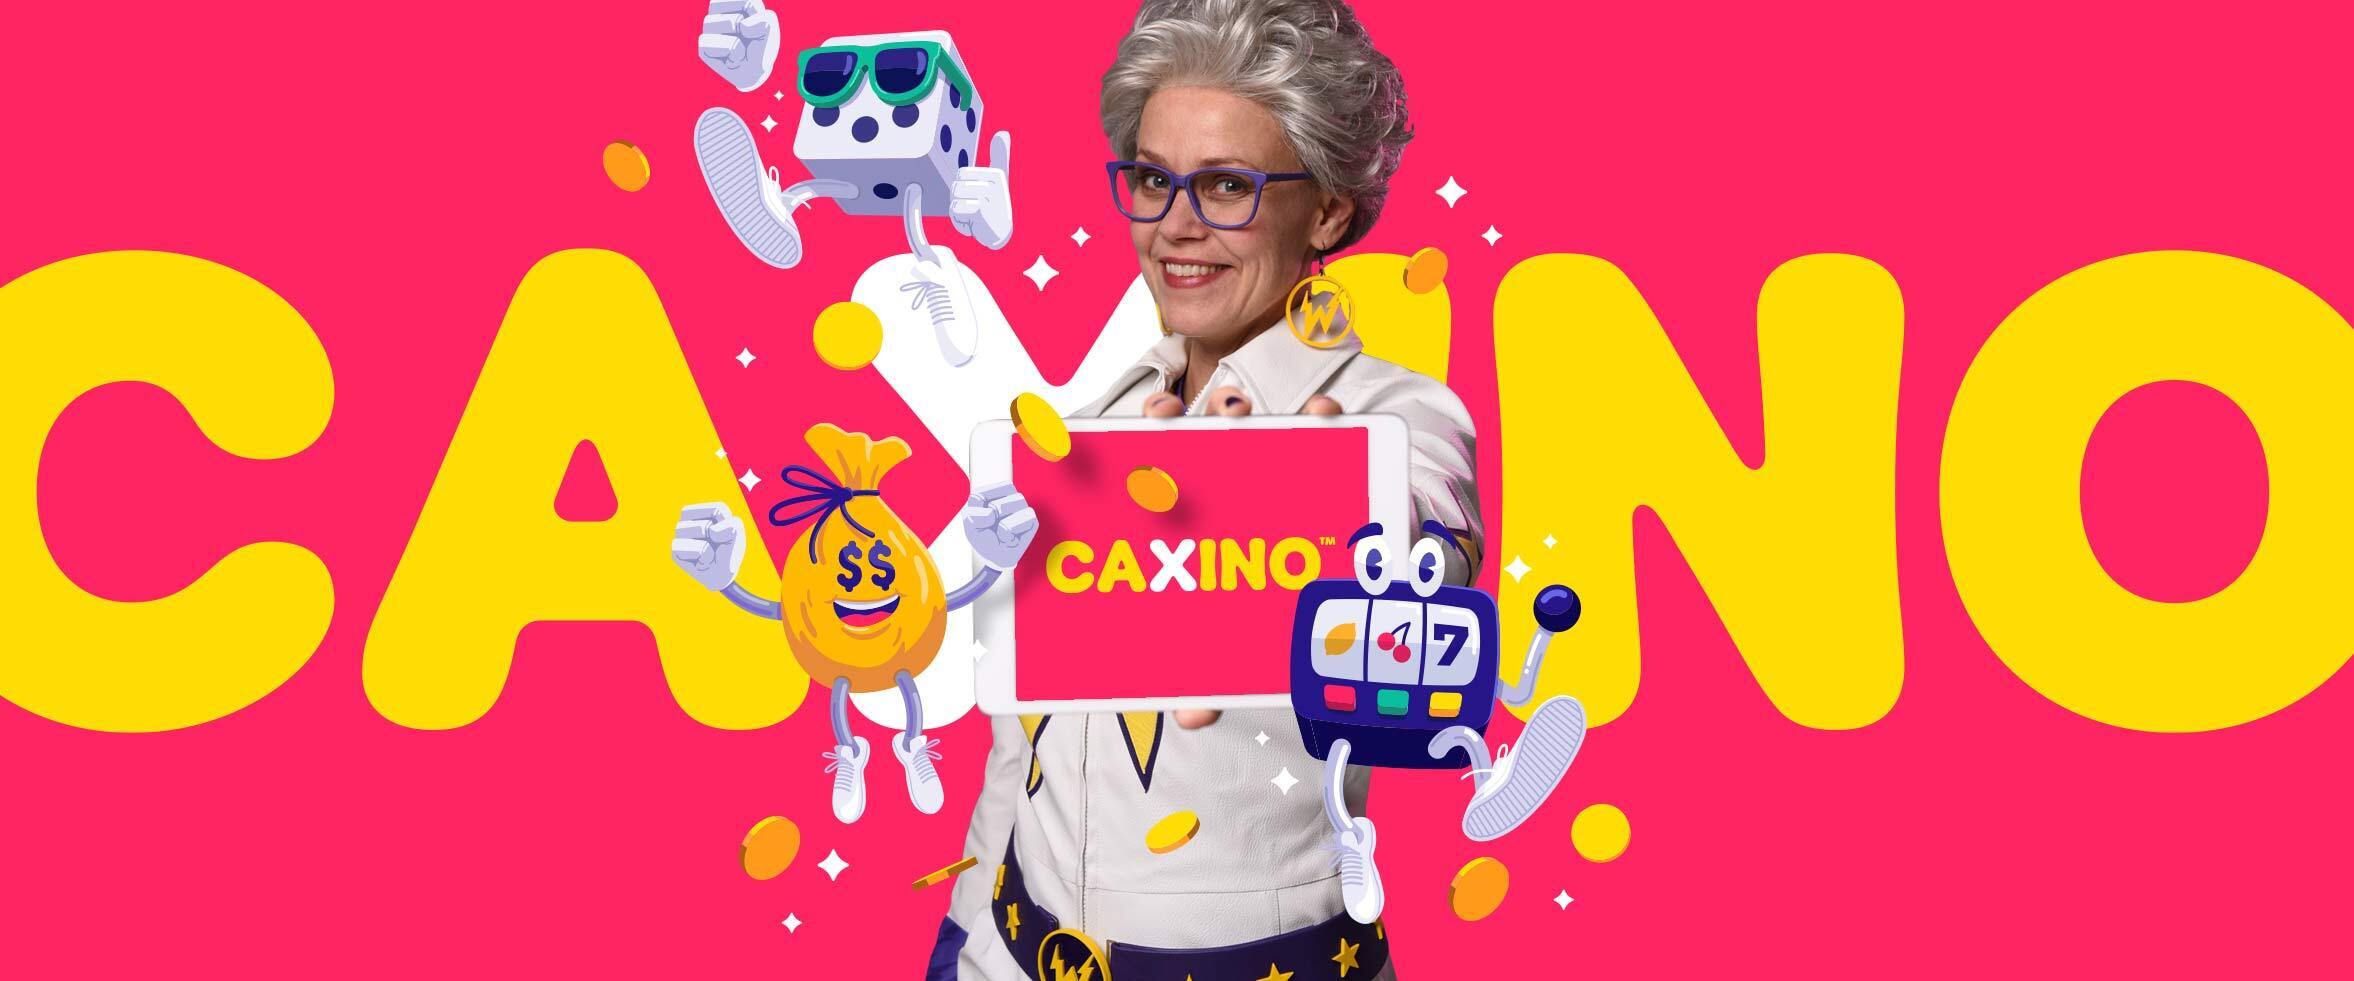 Caxino Casino is Born!